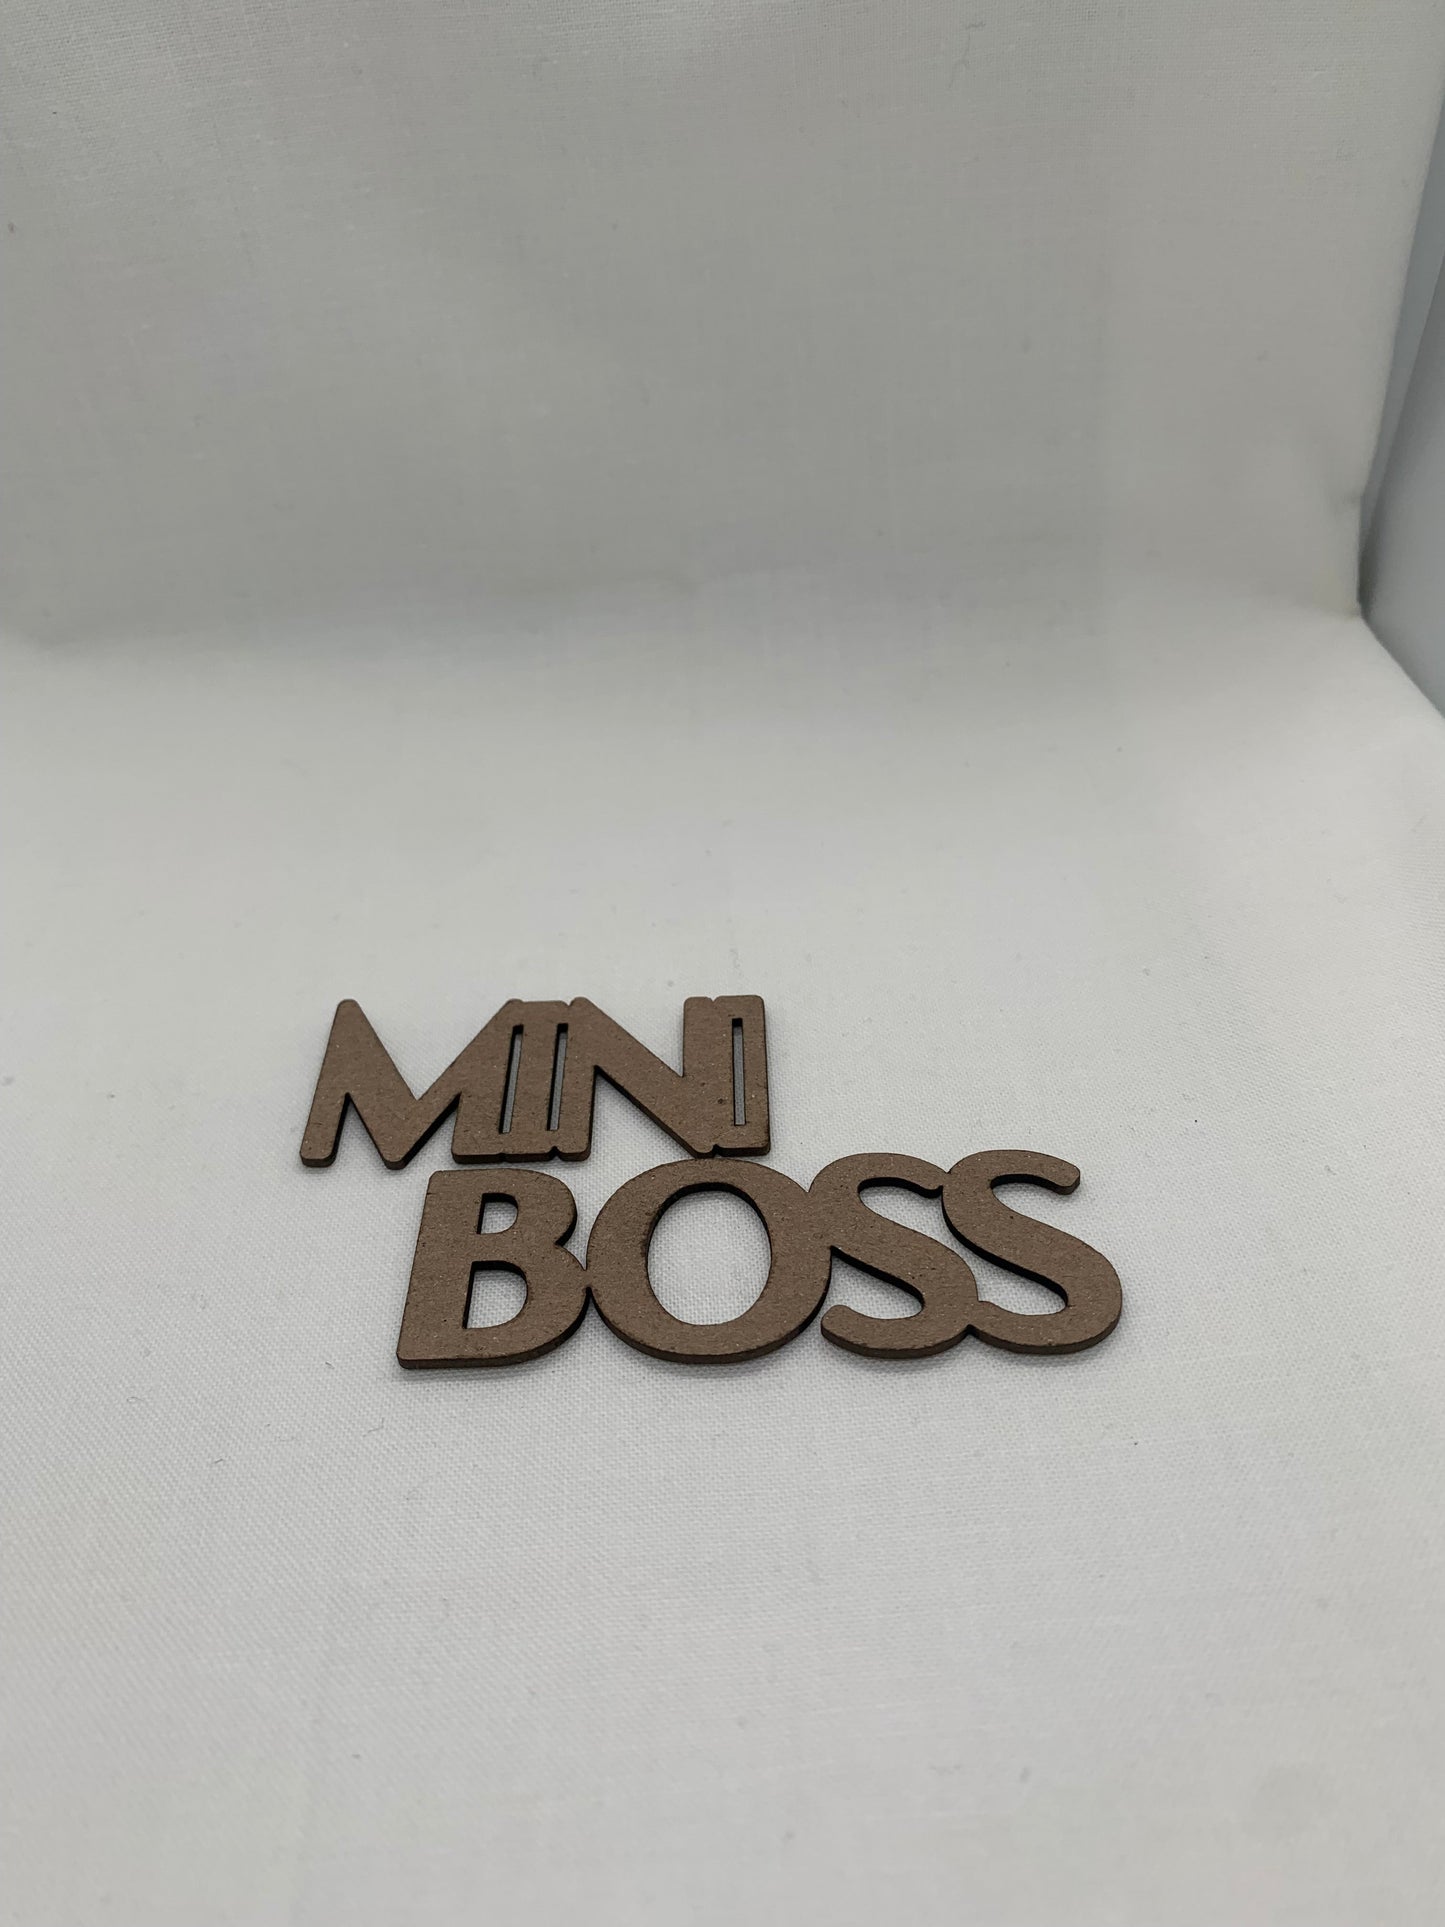 Mini boss - Creative Designs By Kari